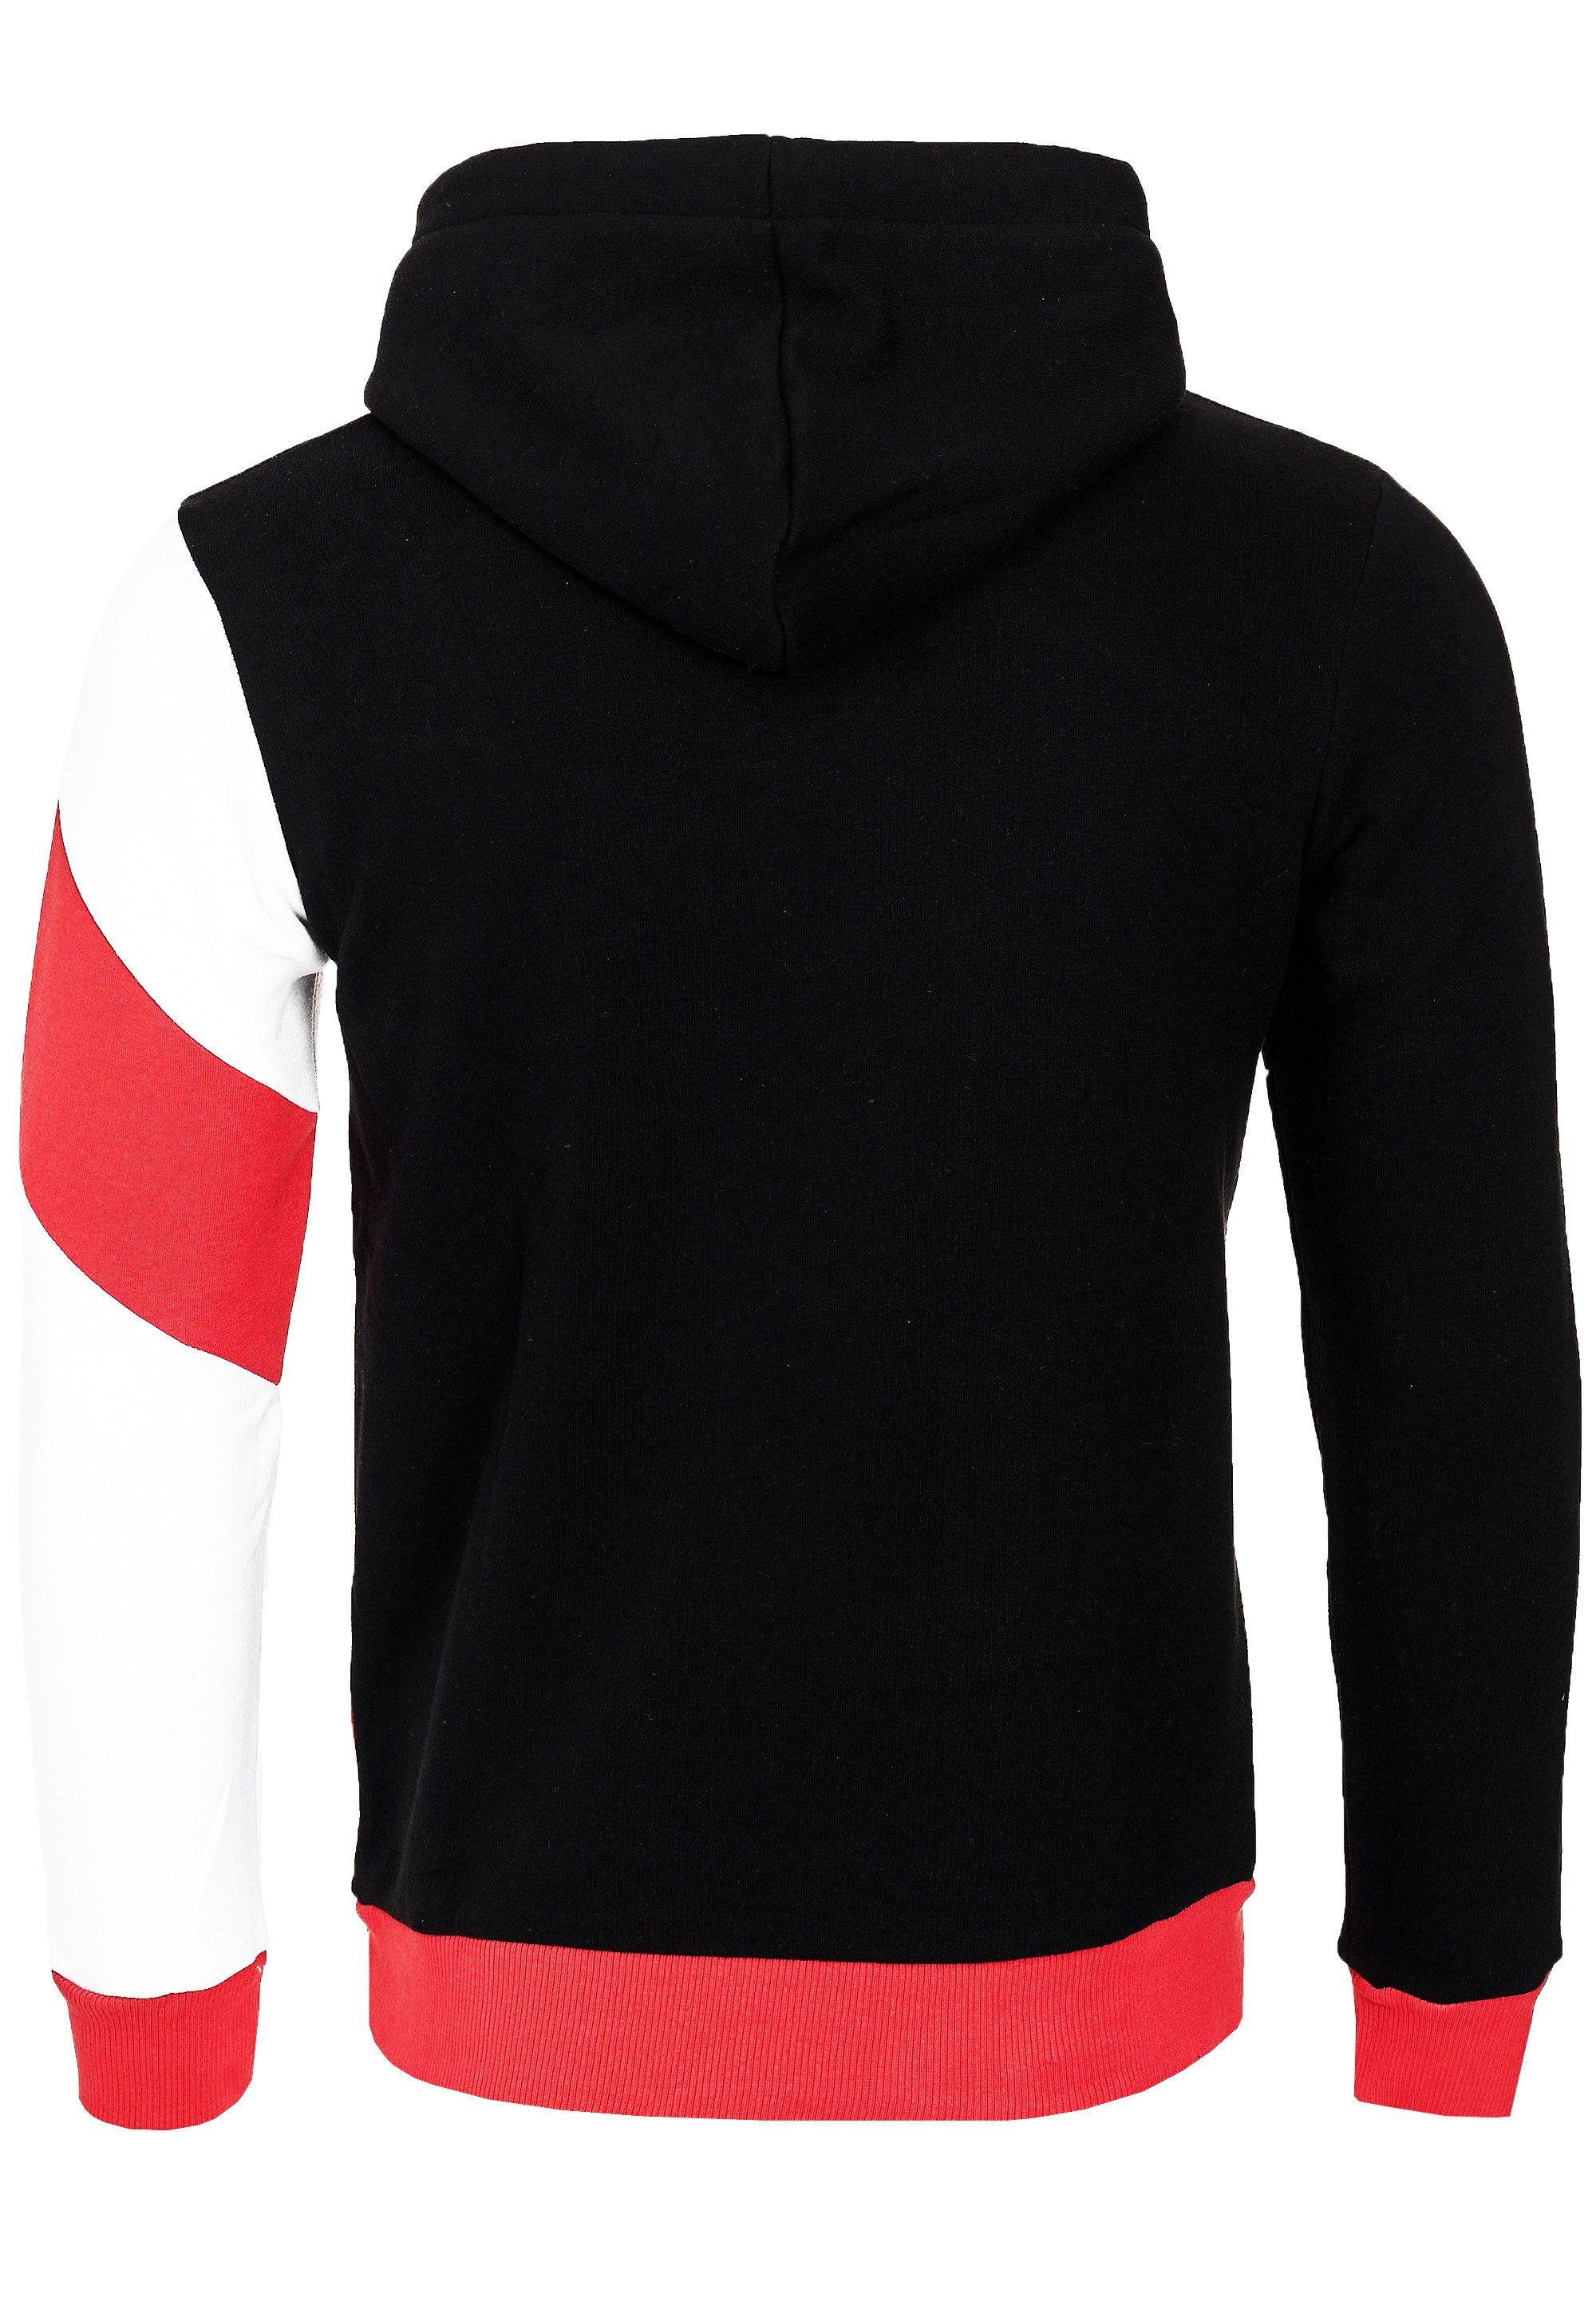 Rusty Neal Kapuzensweatshirt in Design schwarz-rot sportlichem